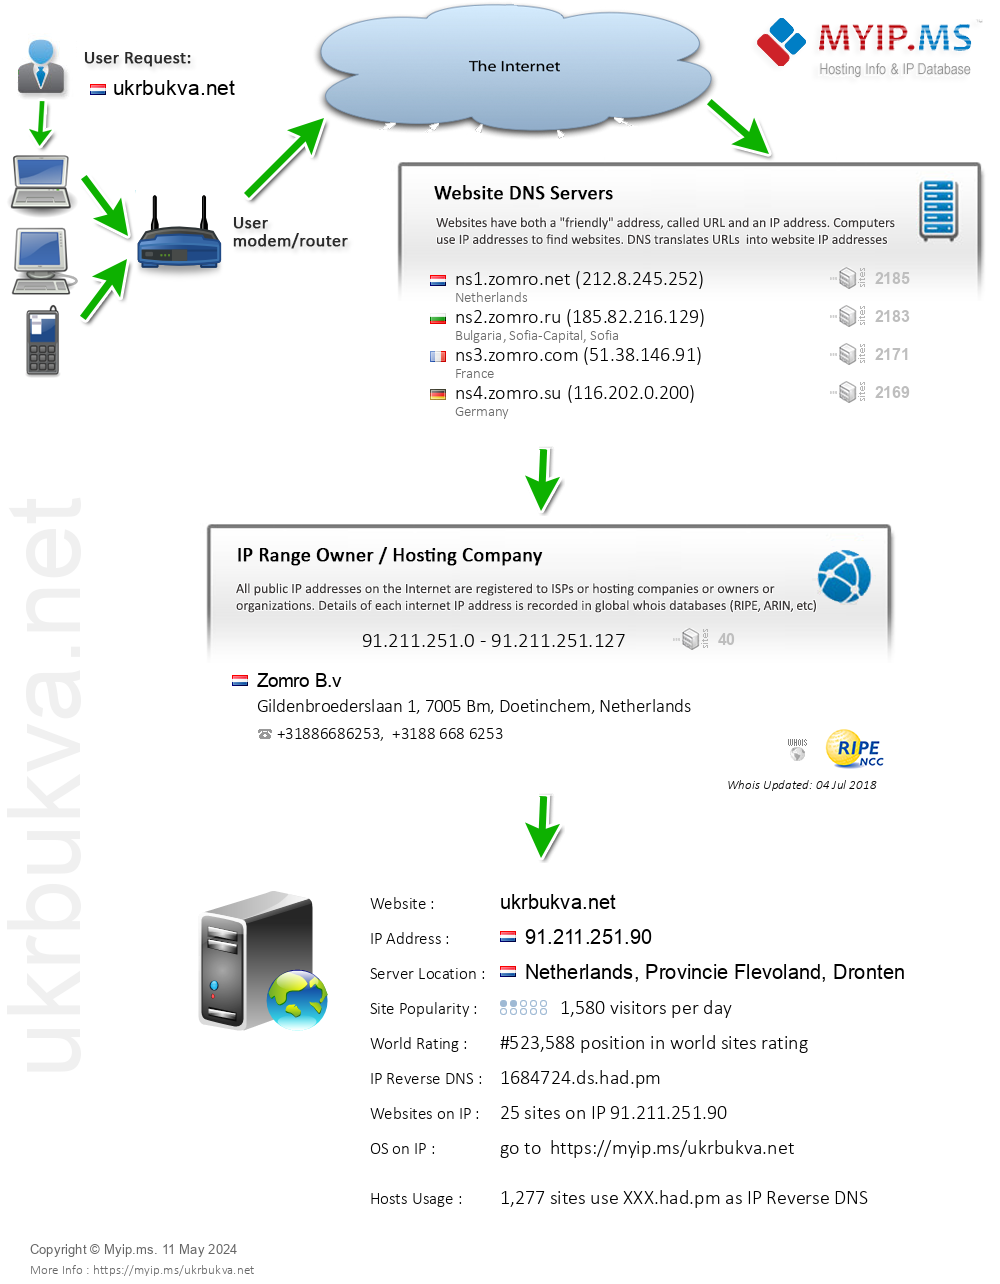 Ukrbukva.net - Website Hosting Visual IP Diagram